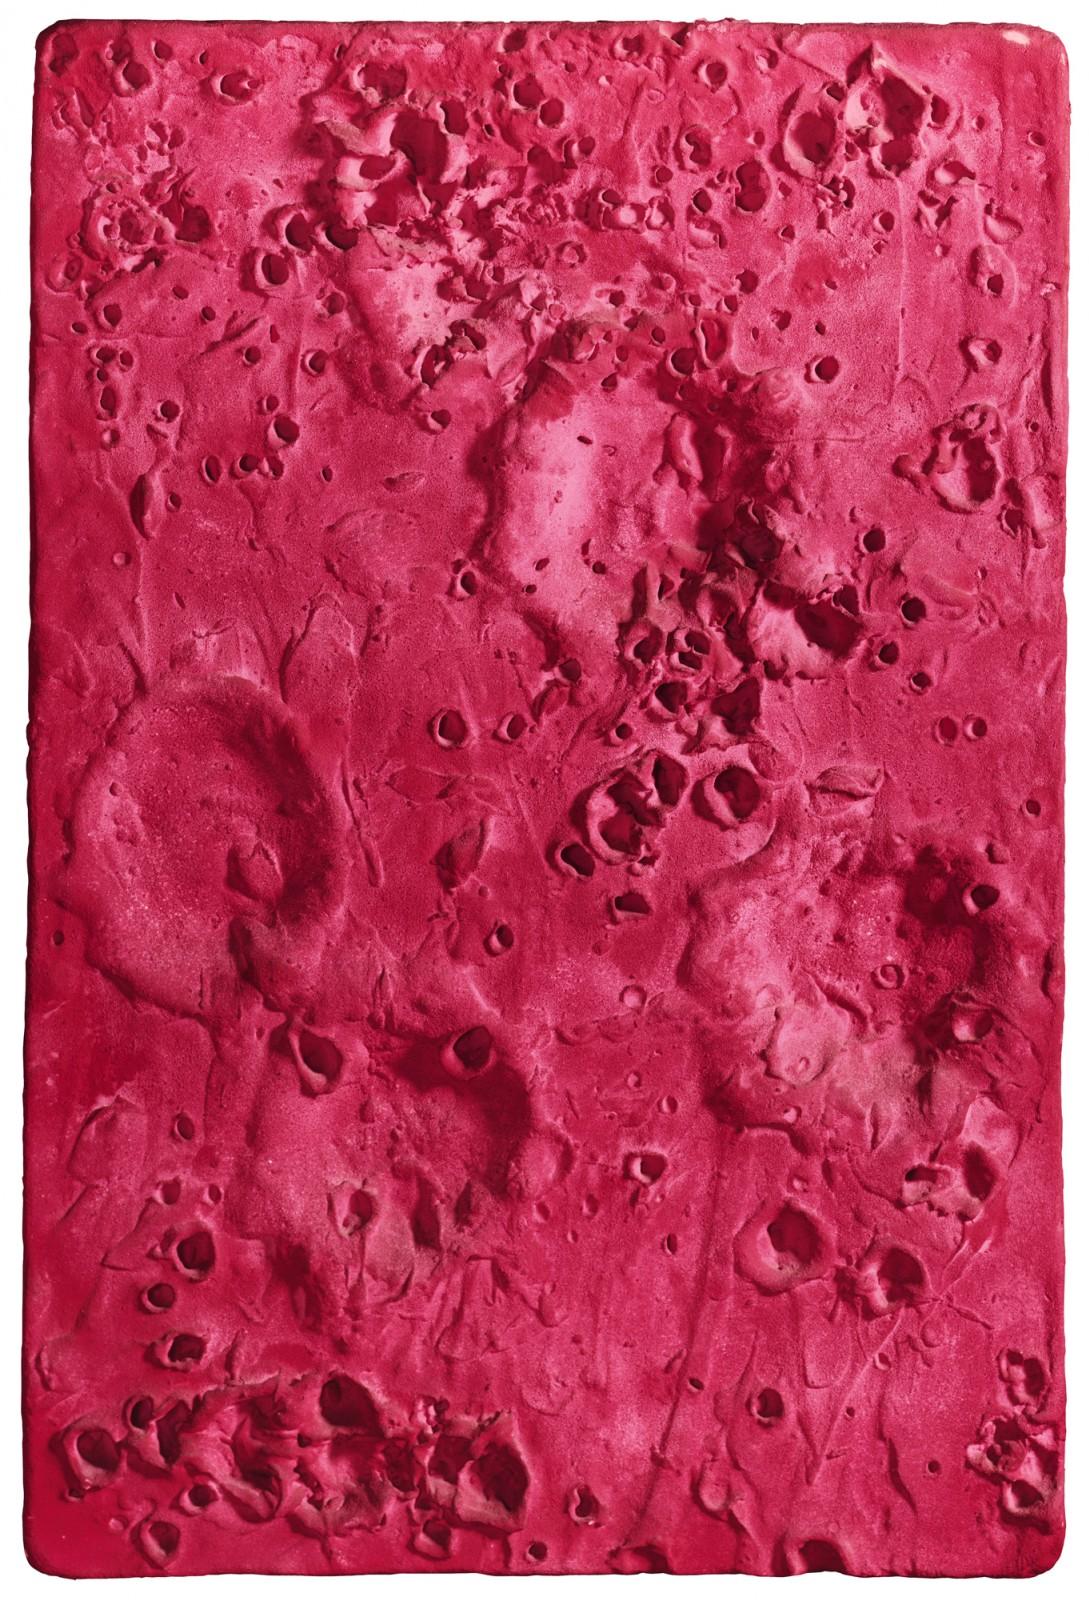 Relief Planétaire rose "Lune I"